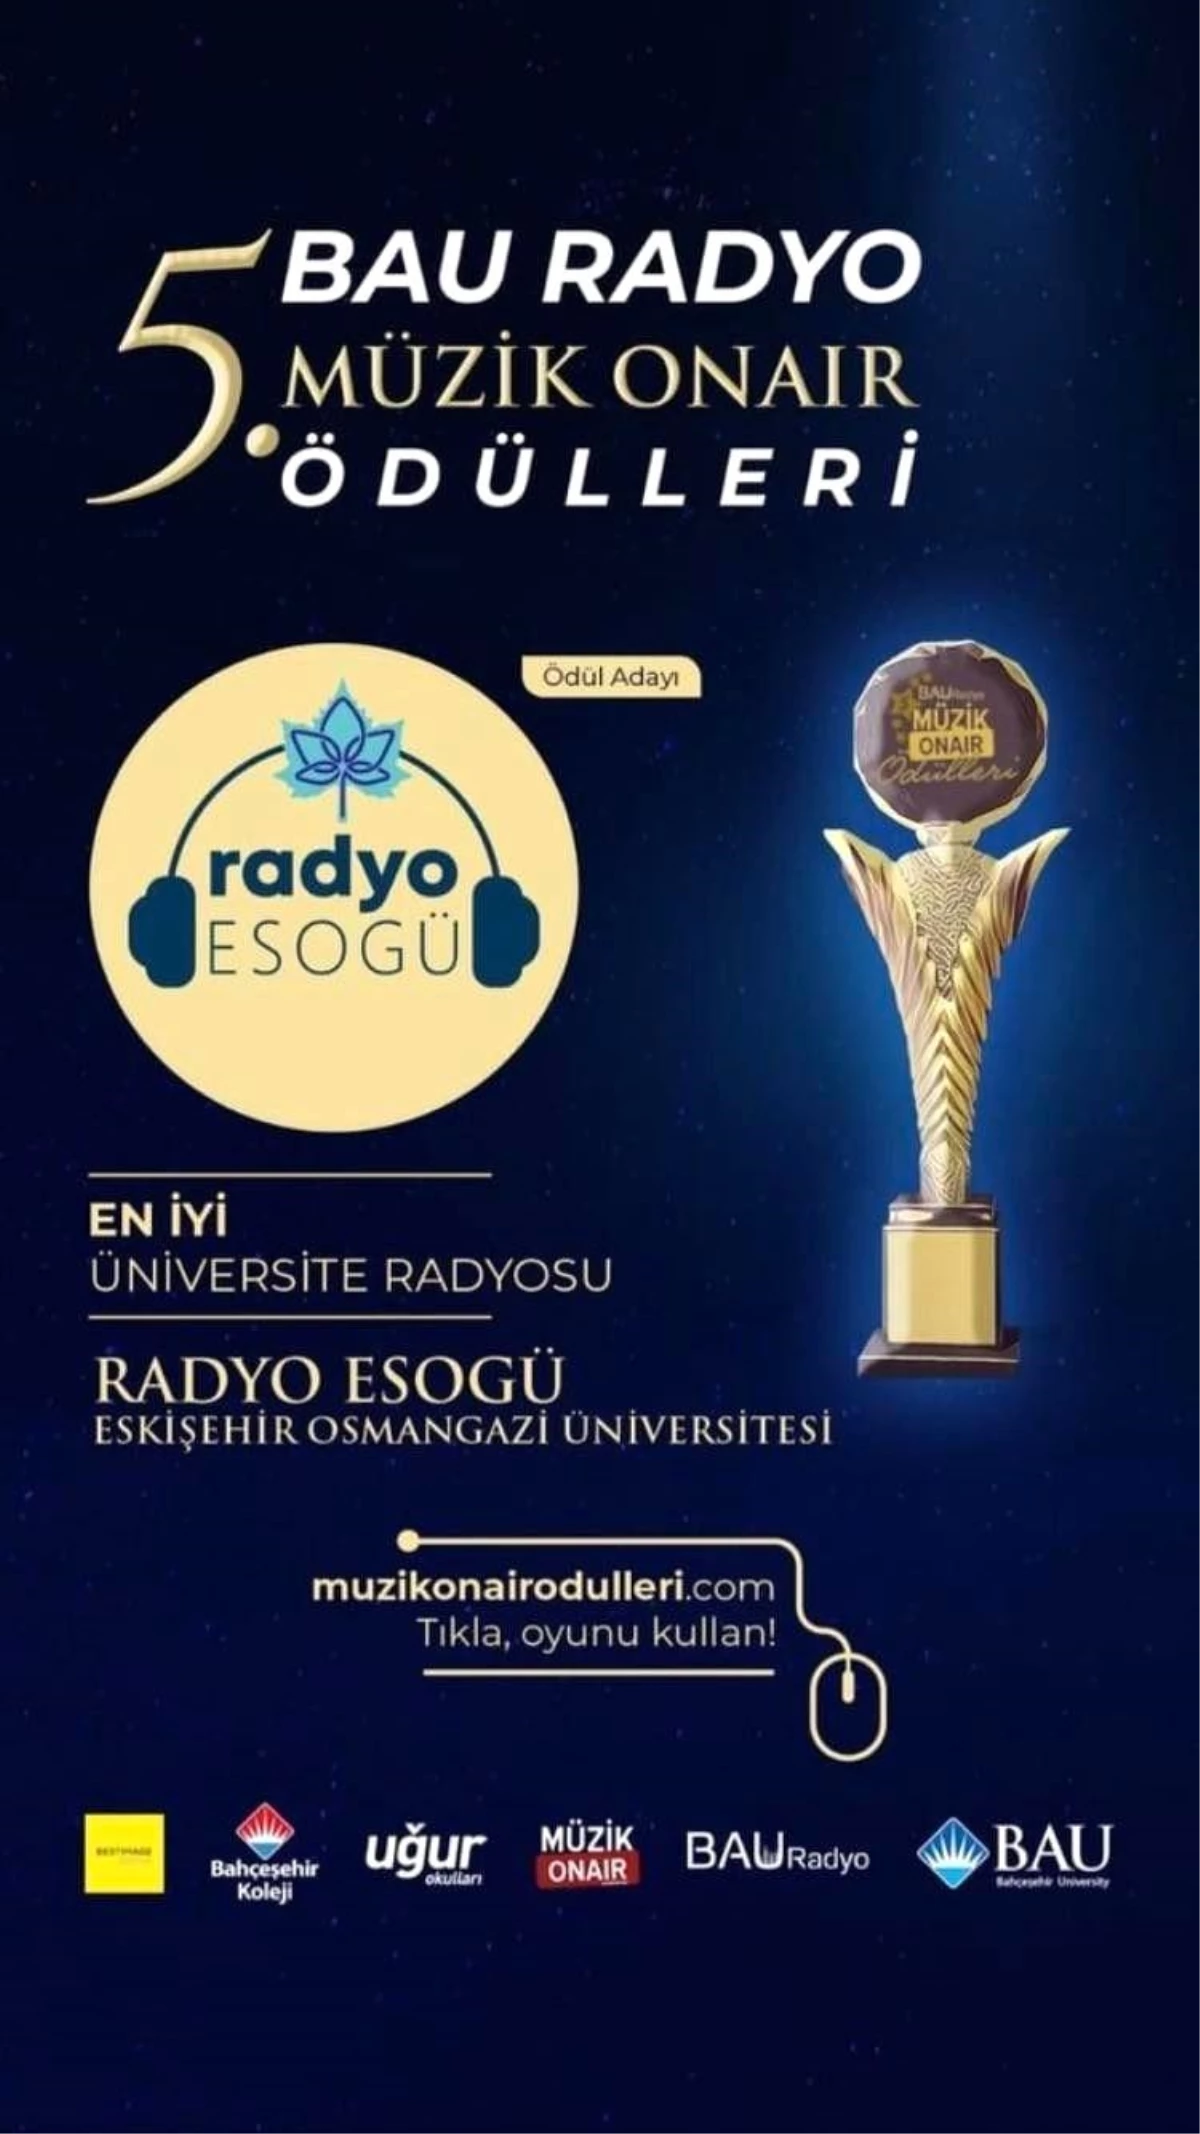 Radyo ESOGÜ Müzik Onair En İyi Üniversite Radyosu ödülüne aday